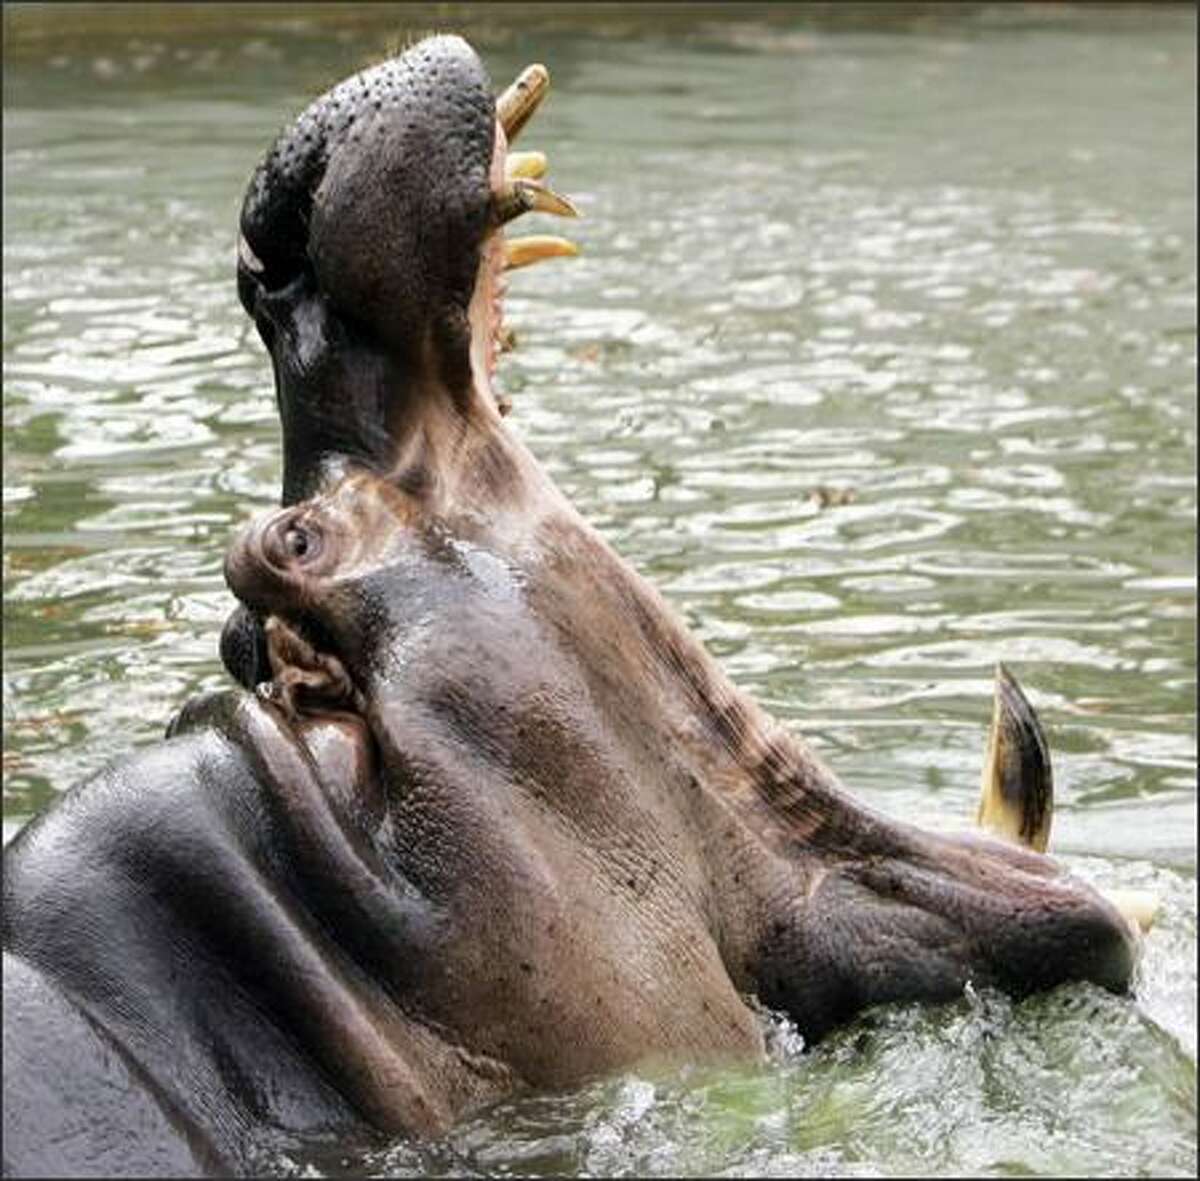 Male Nile hippopotamus "Happy" plays at the Smithzonian National Zoo in Washington. (AP Photo/Manuel Balce Ceneta)